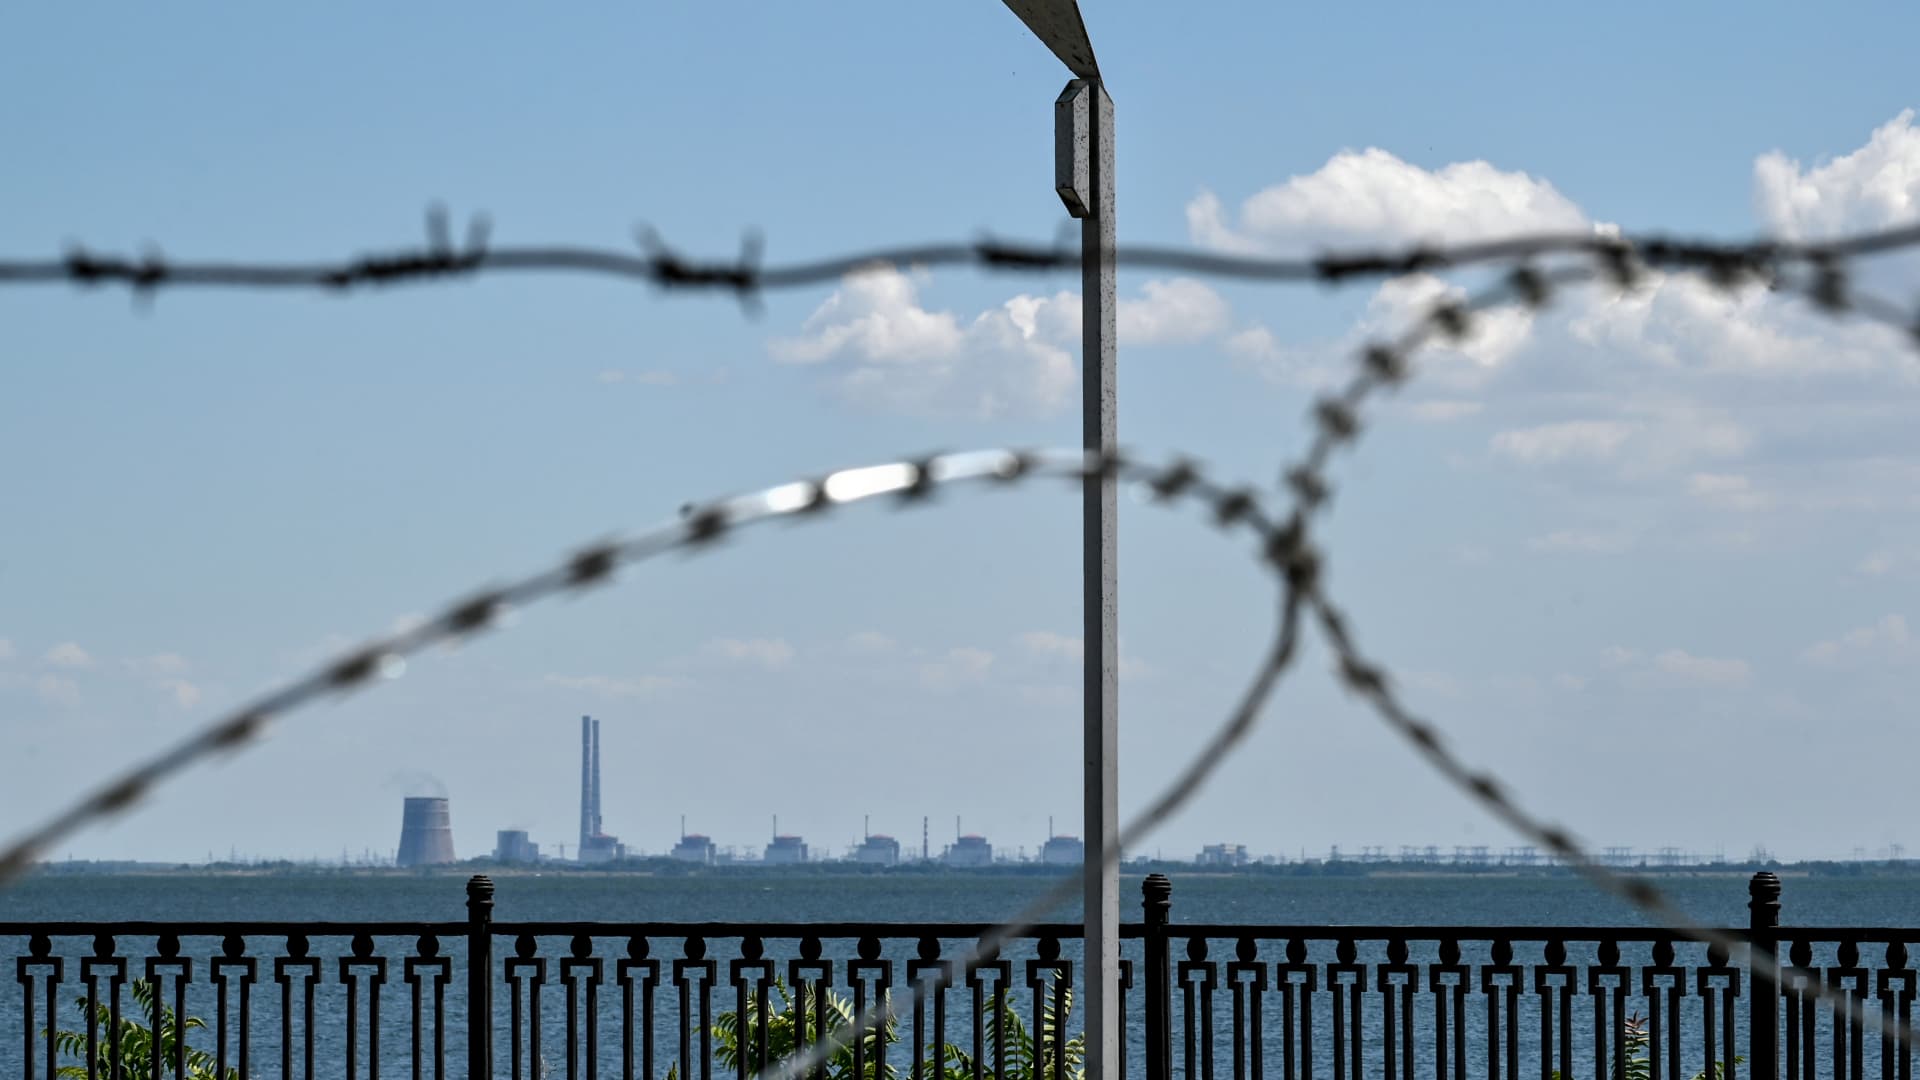 The Zaporizhzhia Nuclear Power Plant in Enerhodar, Zaporizhzhia Region, is seen through barbed wire on the embankment in Nikopol, Dnipropetrovsk Region, central Ukraine.